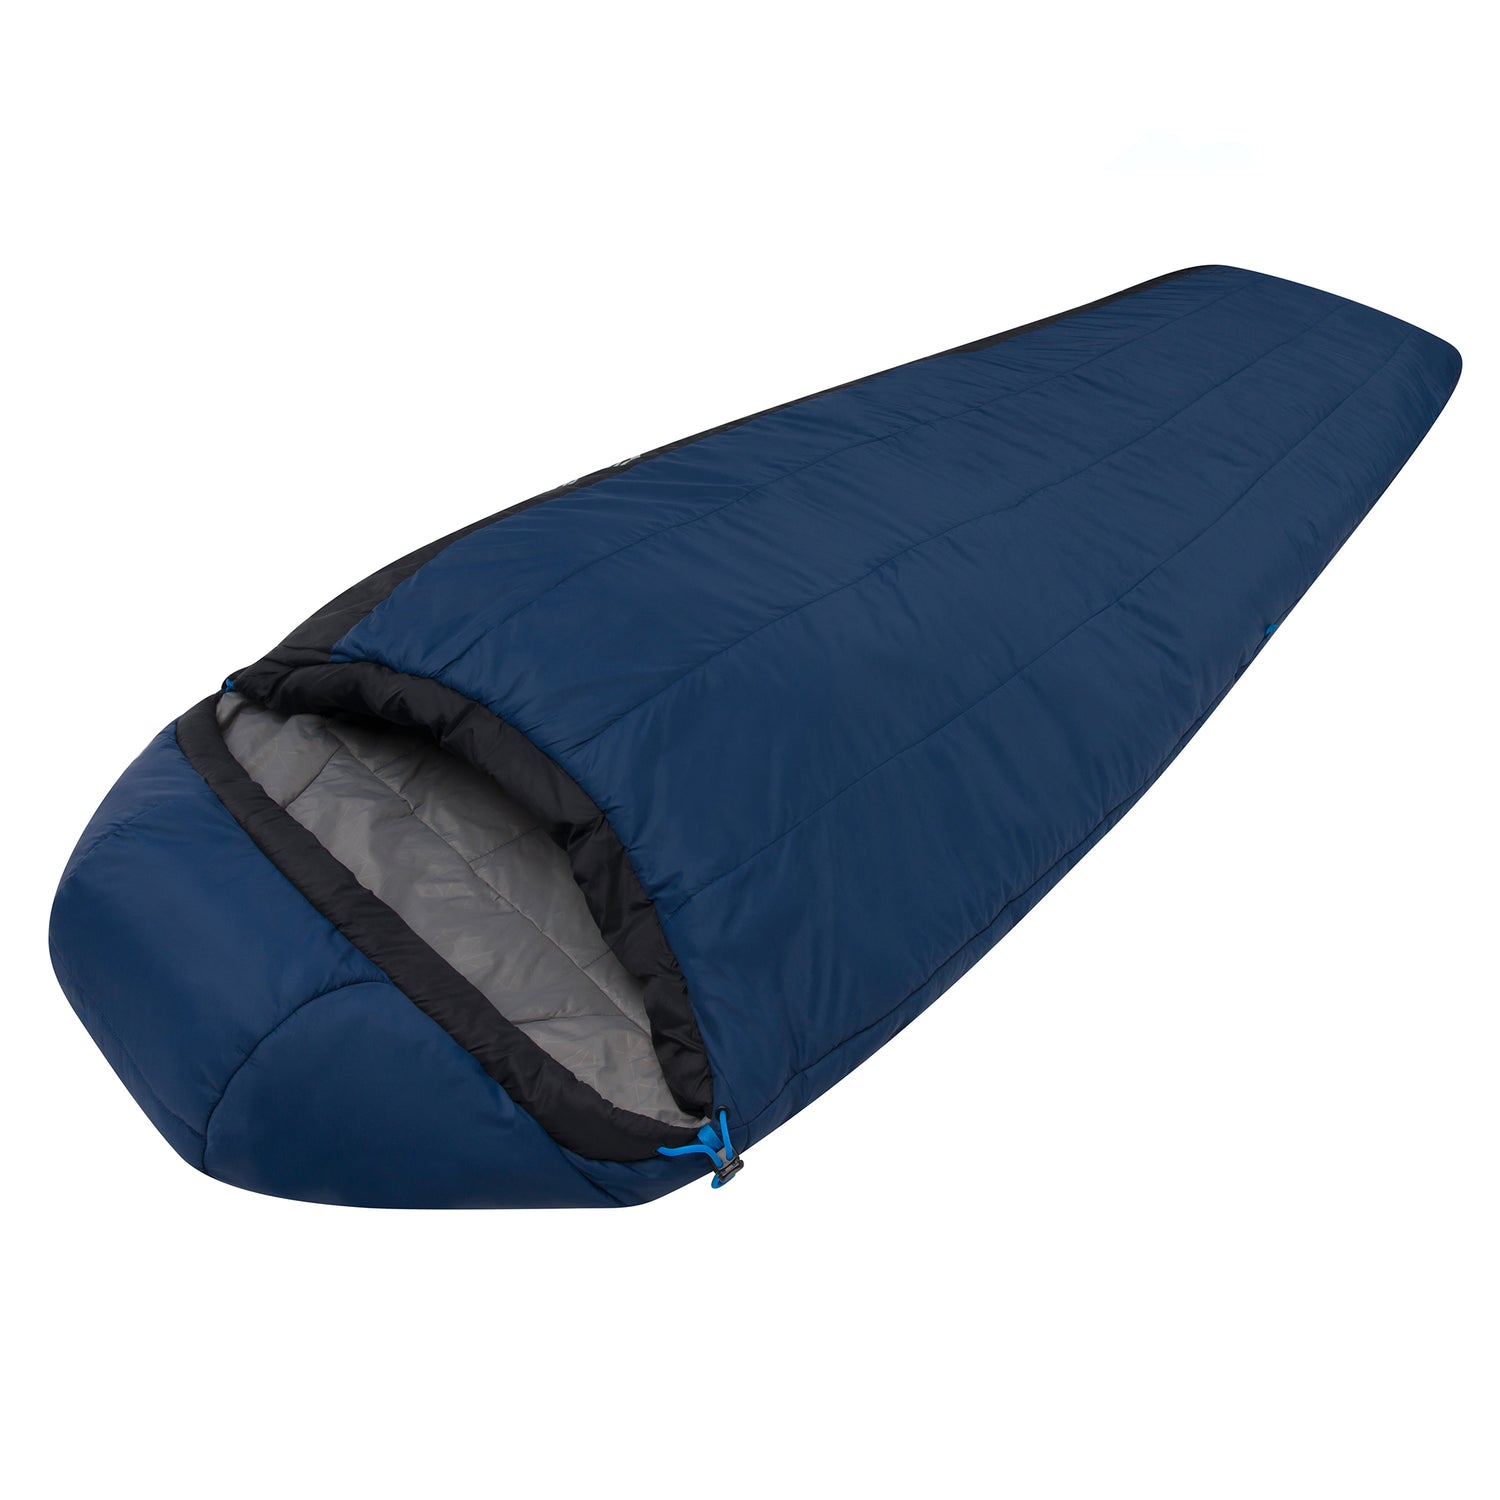 Trailhead Synthetic Sleeping Bag (30°F & 20°F)